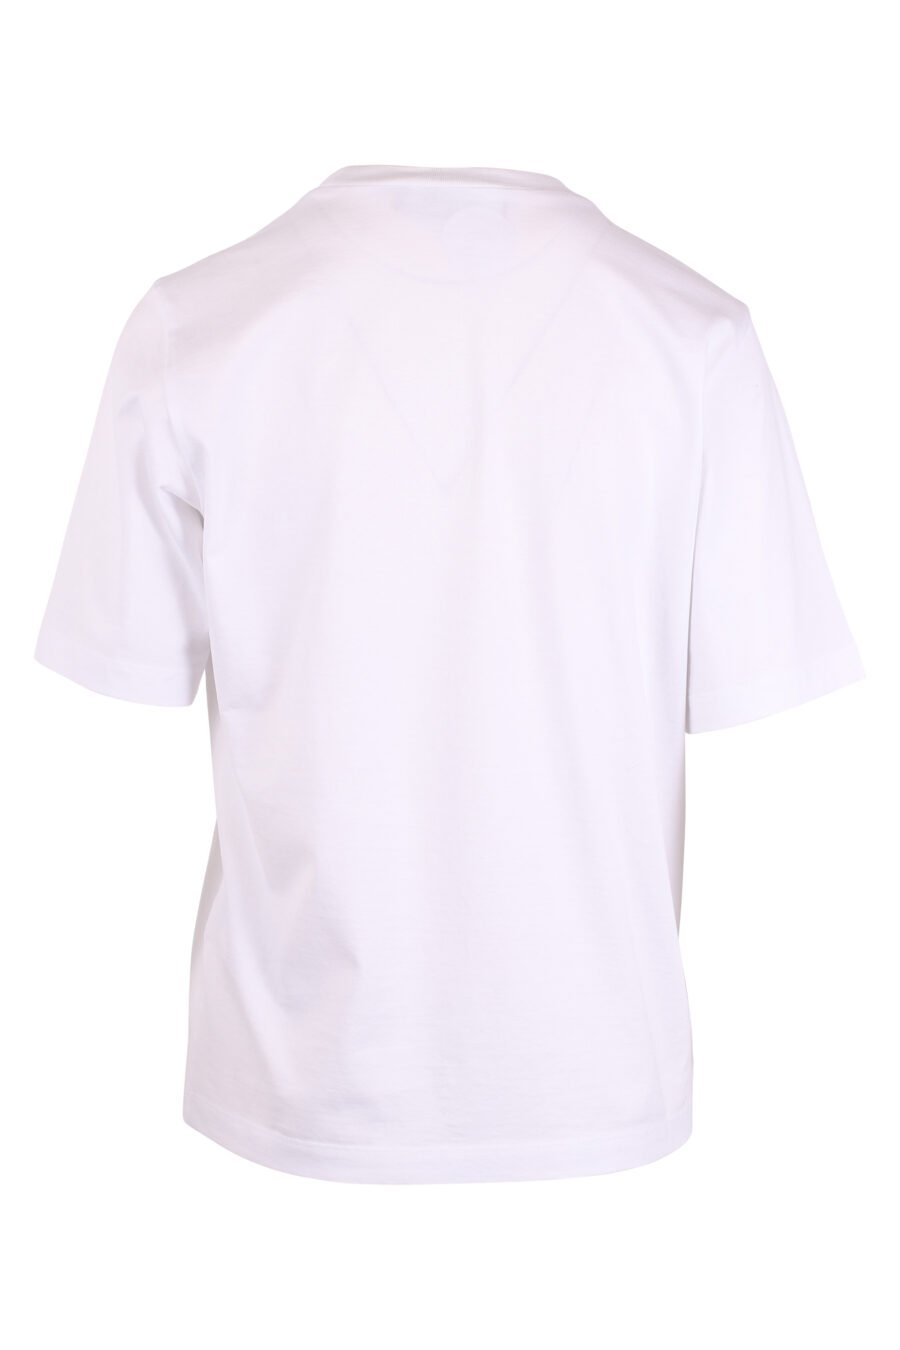 Weißes T-Shirt mit karikiertem Blatt-Logo - IMG 4360